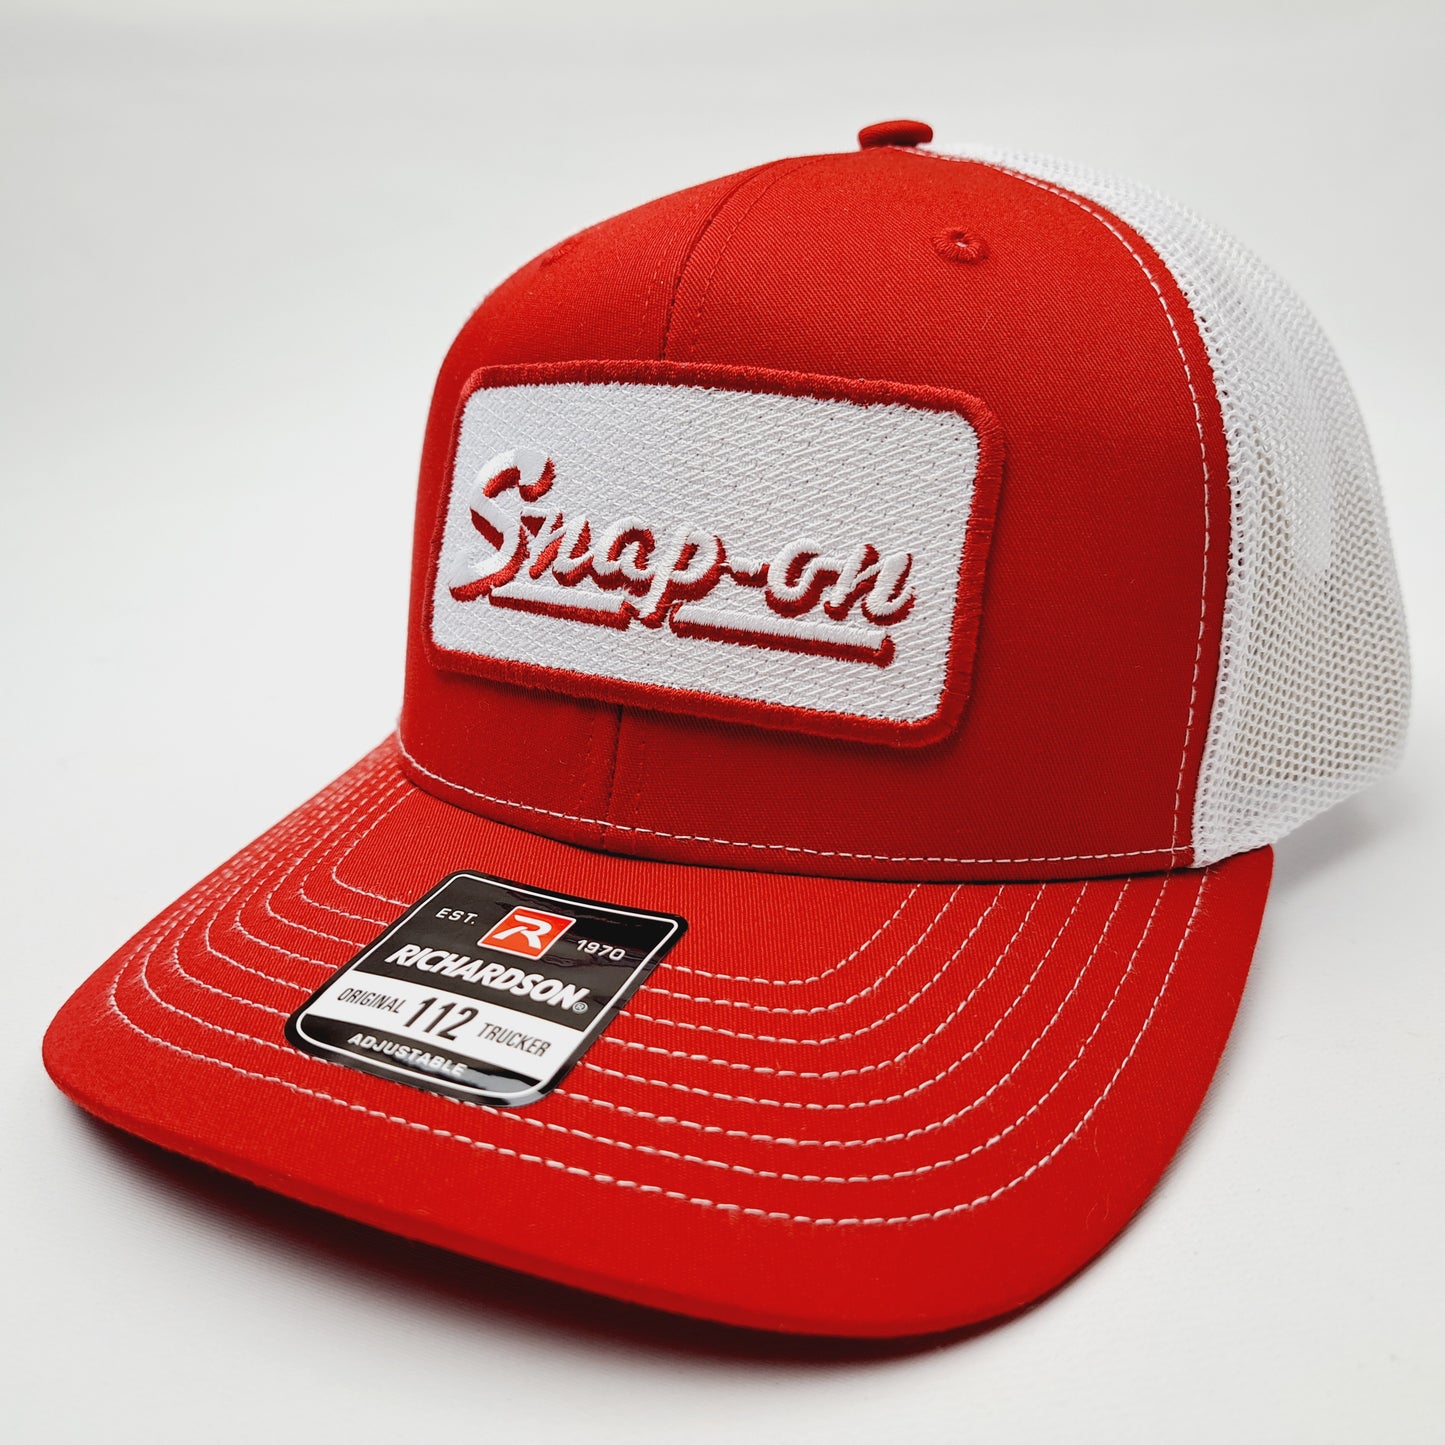 Snap-on Patch Richardson 112 Trucker Mesh Snapback Cap Hat Red & White